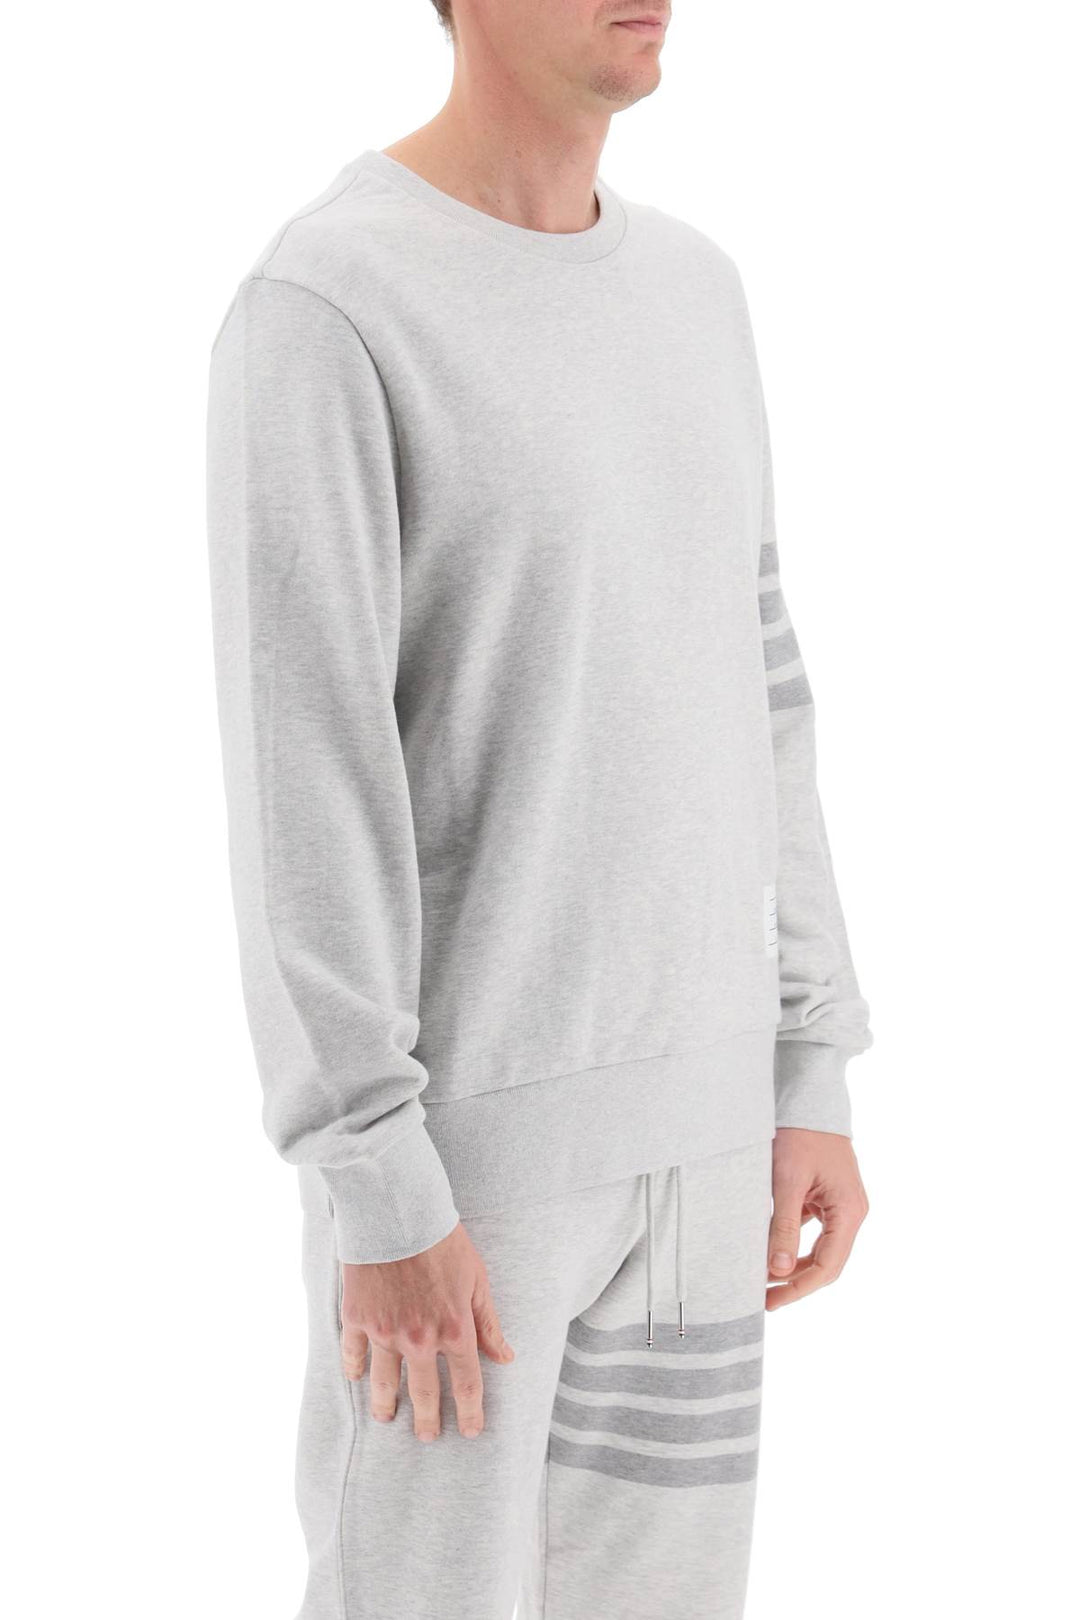 Thom Browne Cotton 4 Bar Sweatshirt   Grigio